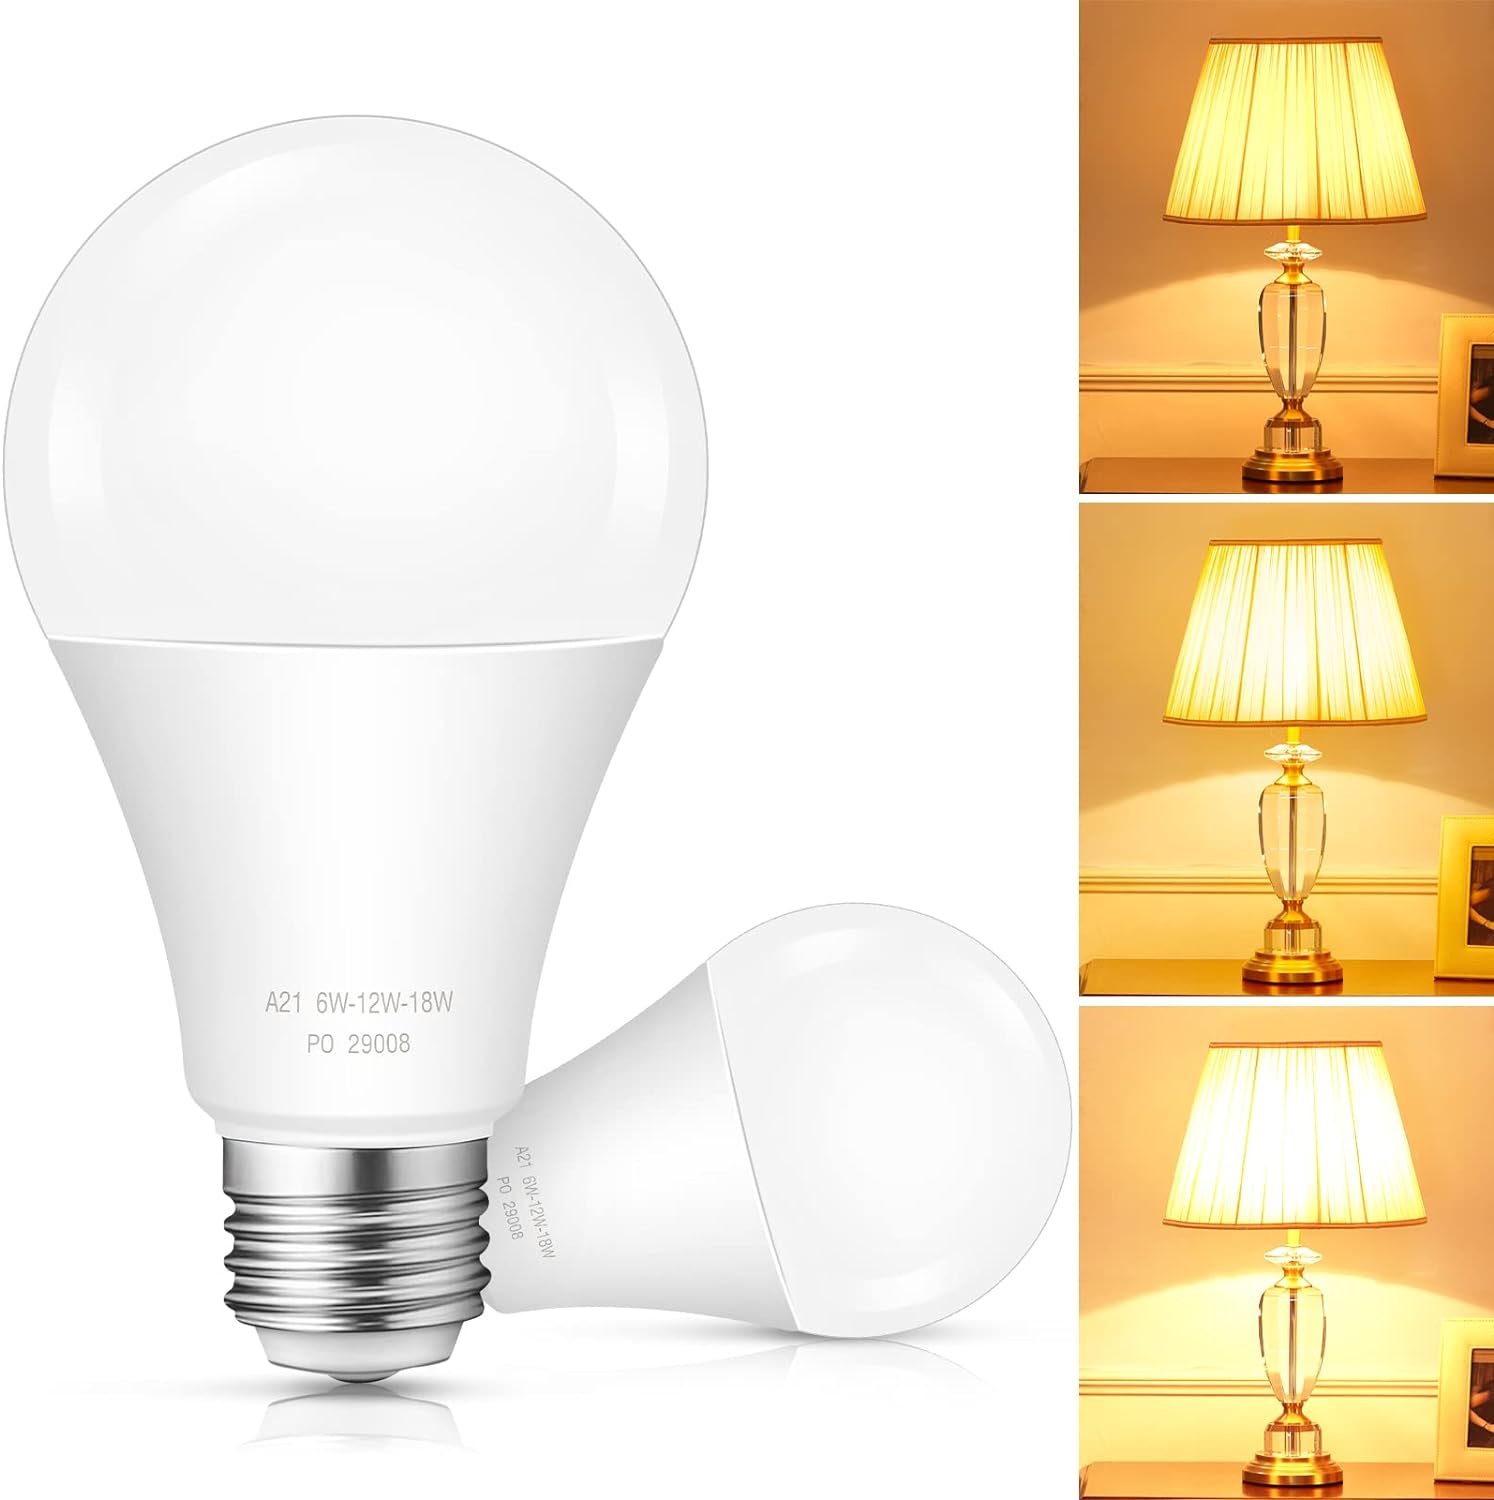 Zorykn 3 Way Light Bulbs 50 100 150 Soft White Review